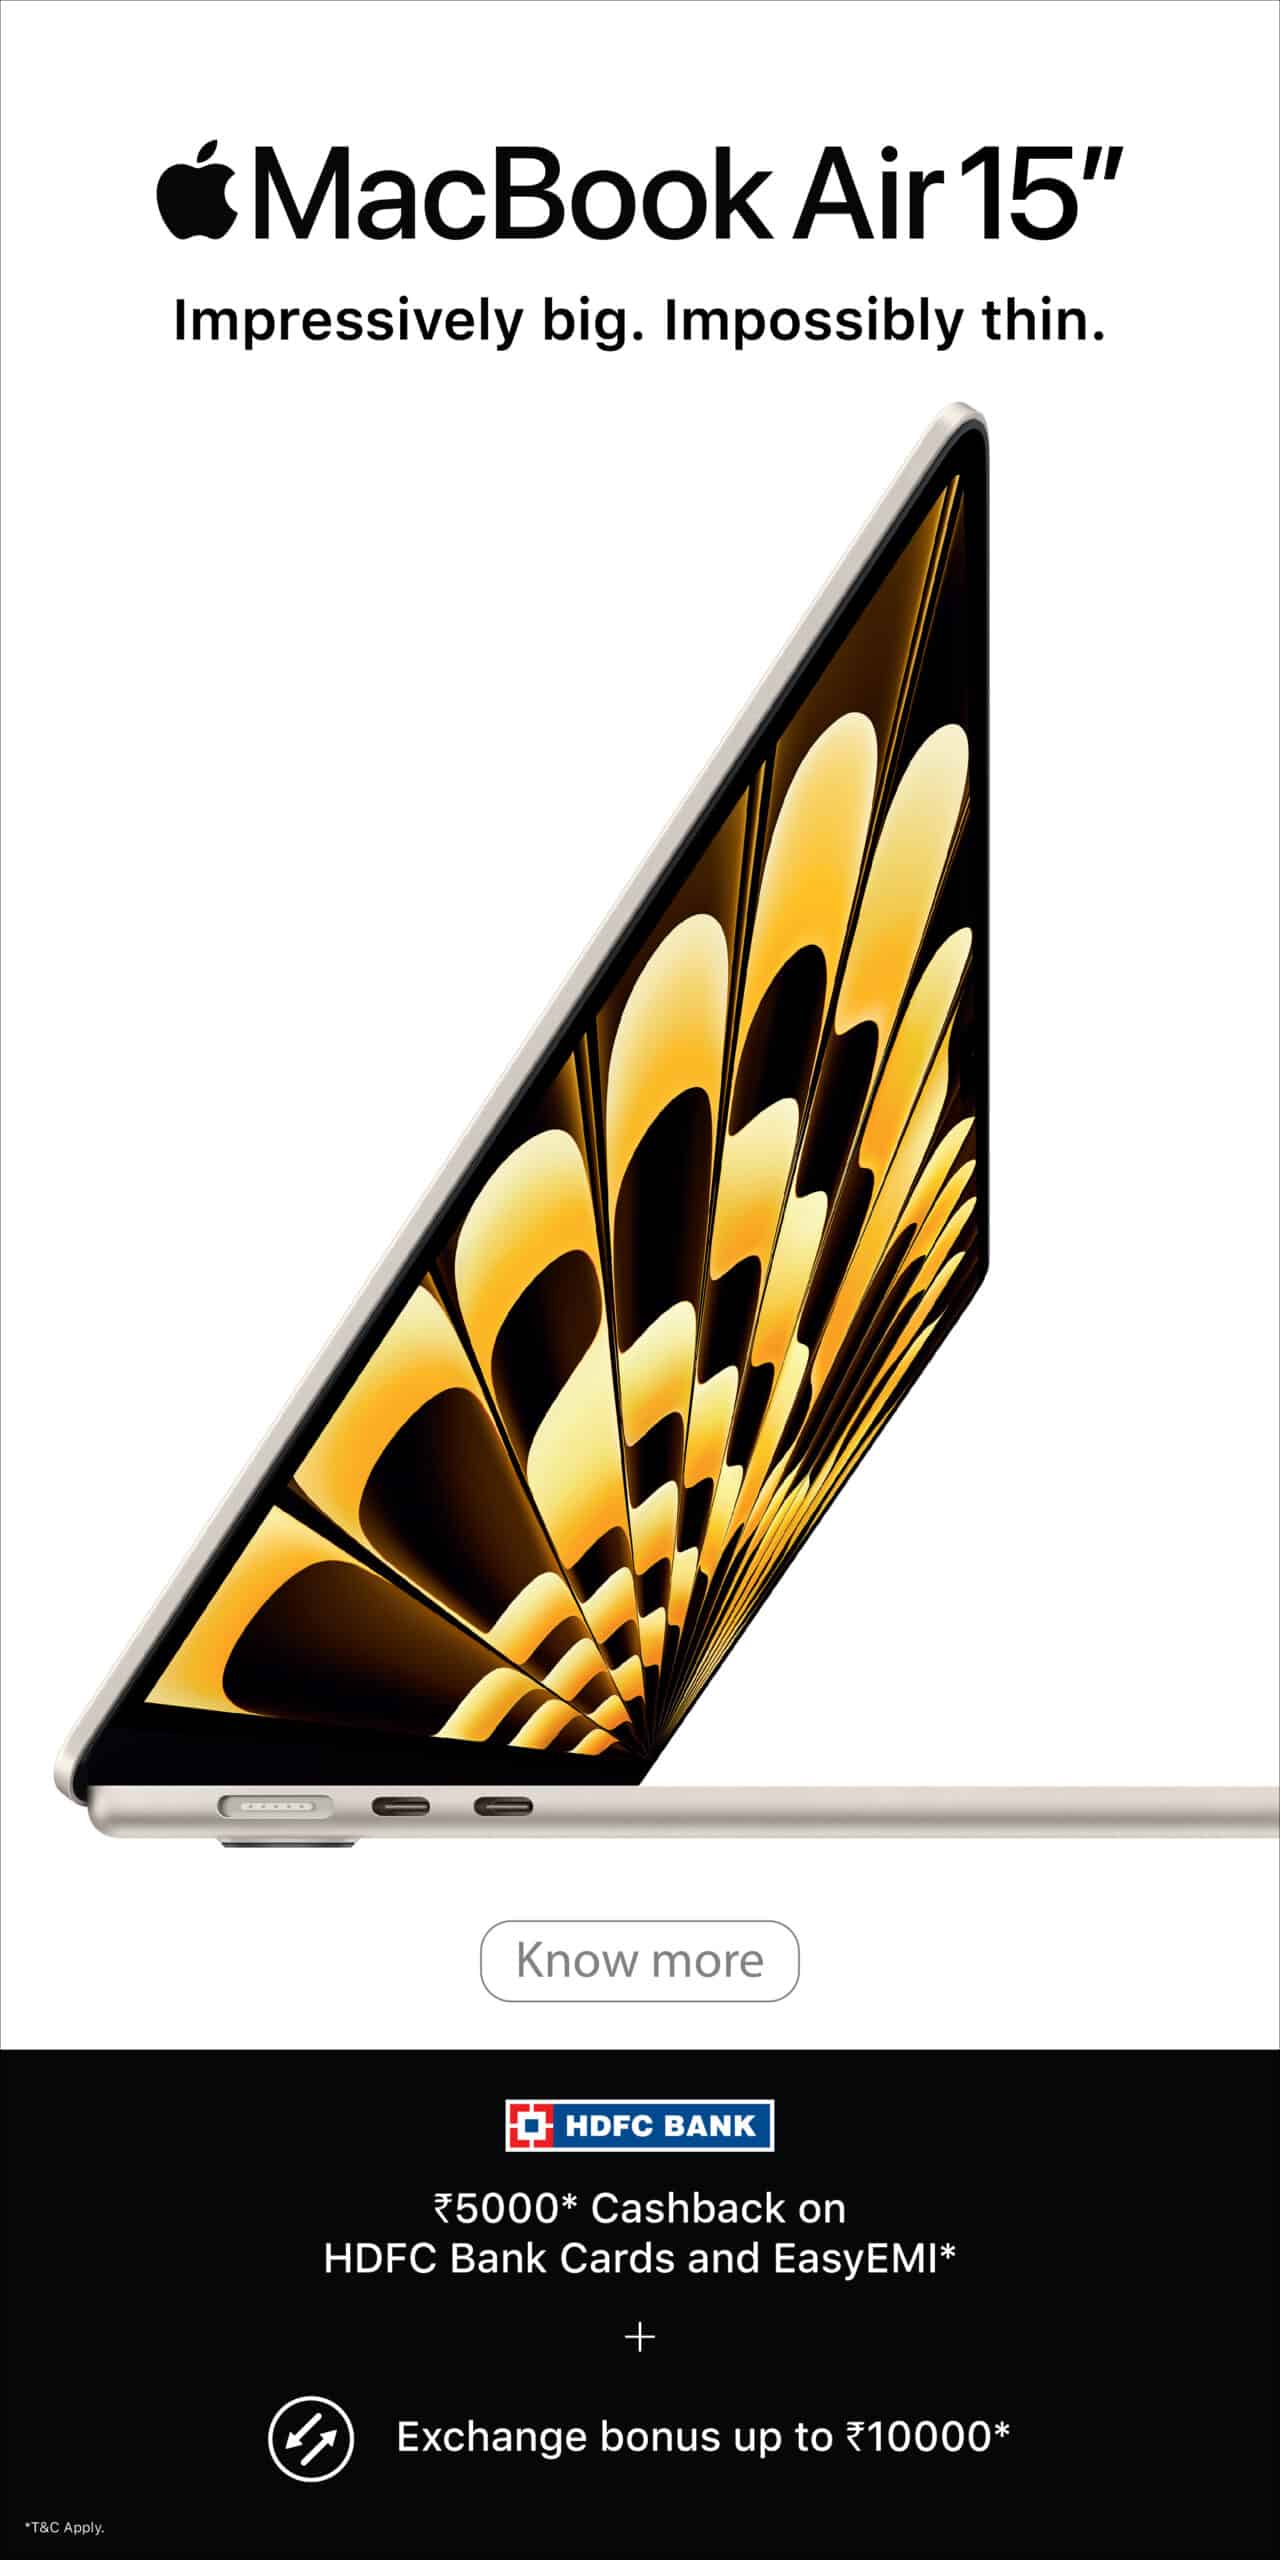 24841_Apple MacBook Air New Launch 15 Web Elements_Artboard 1x2 Air